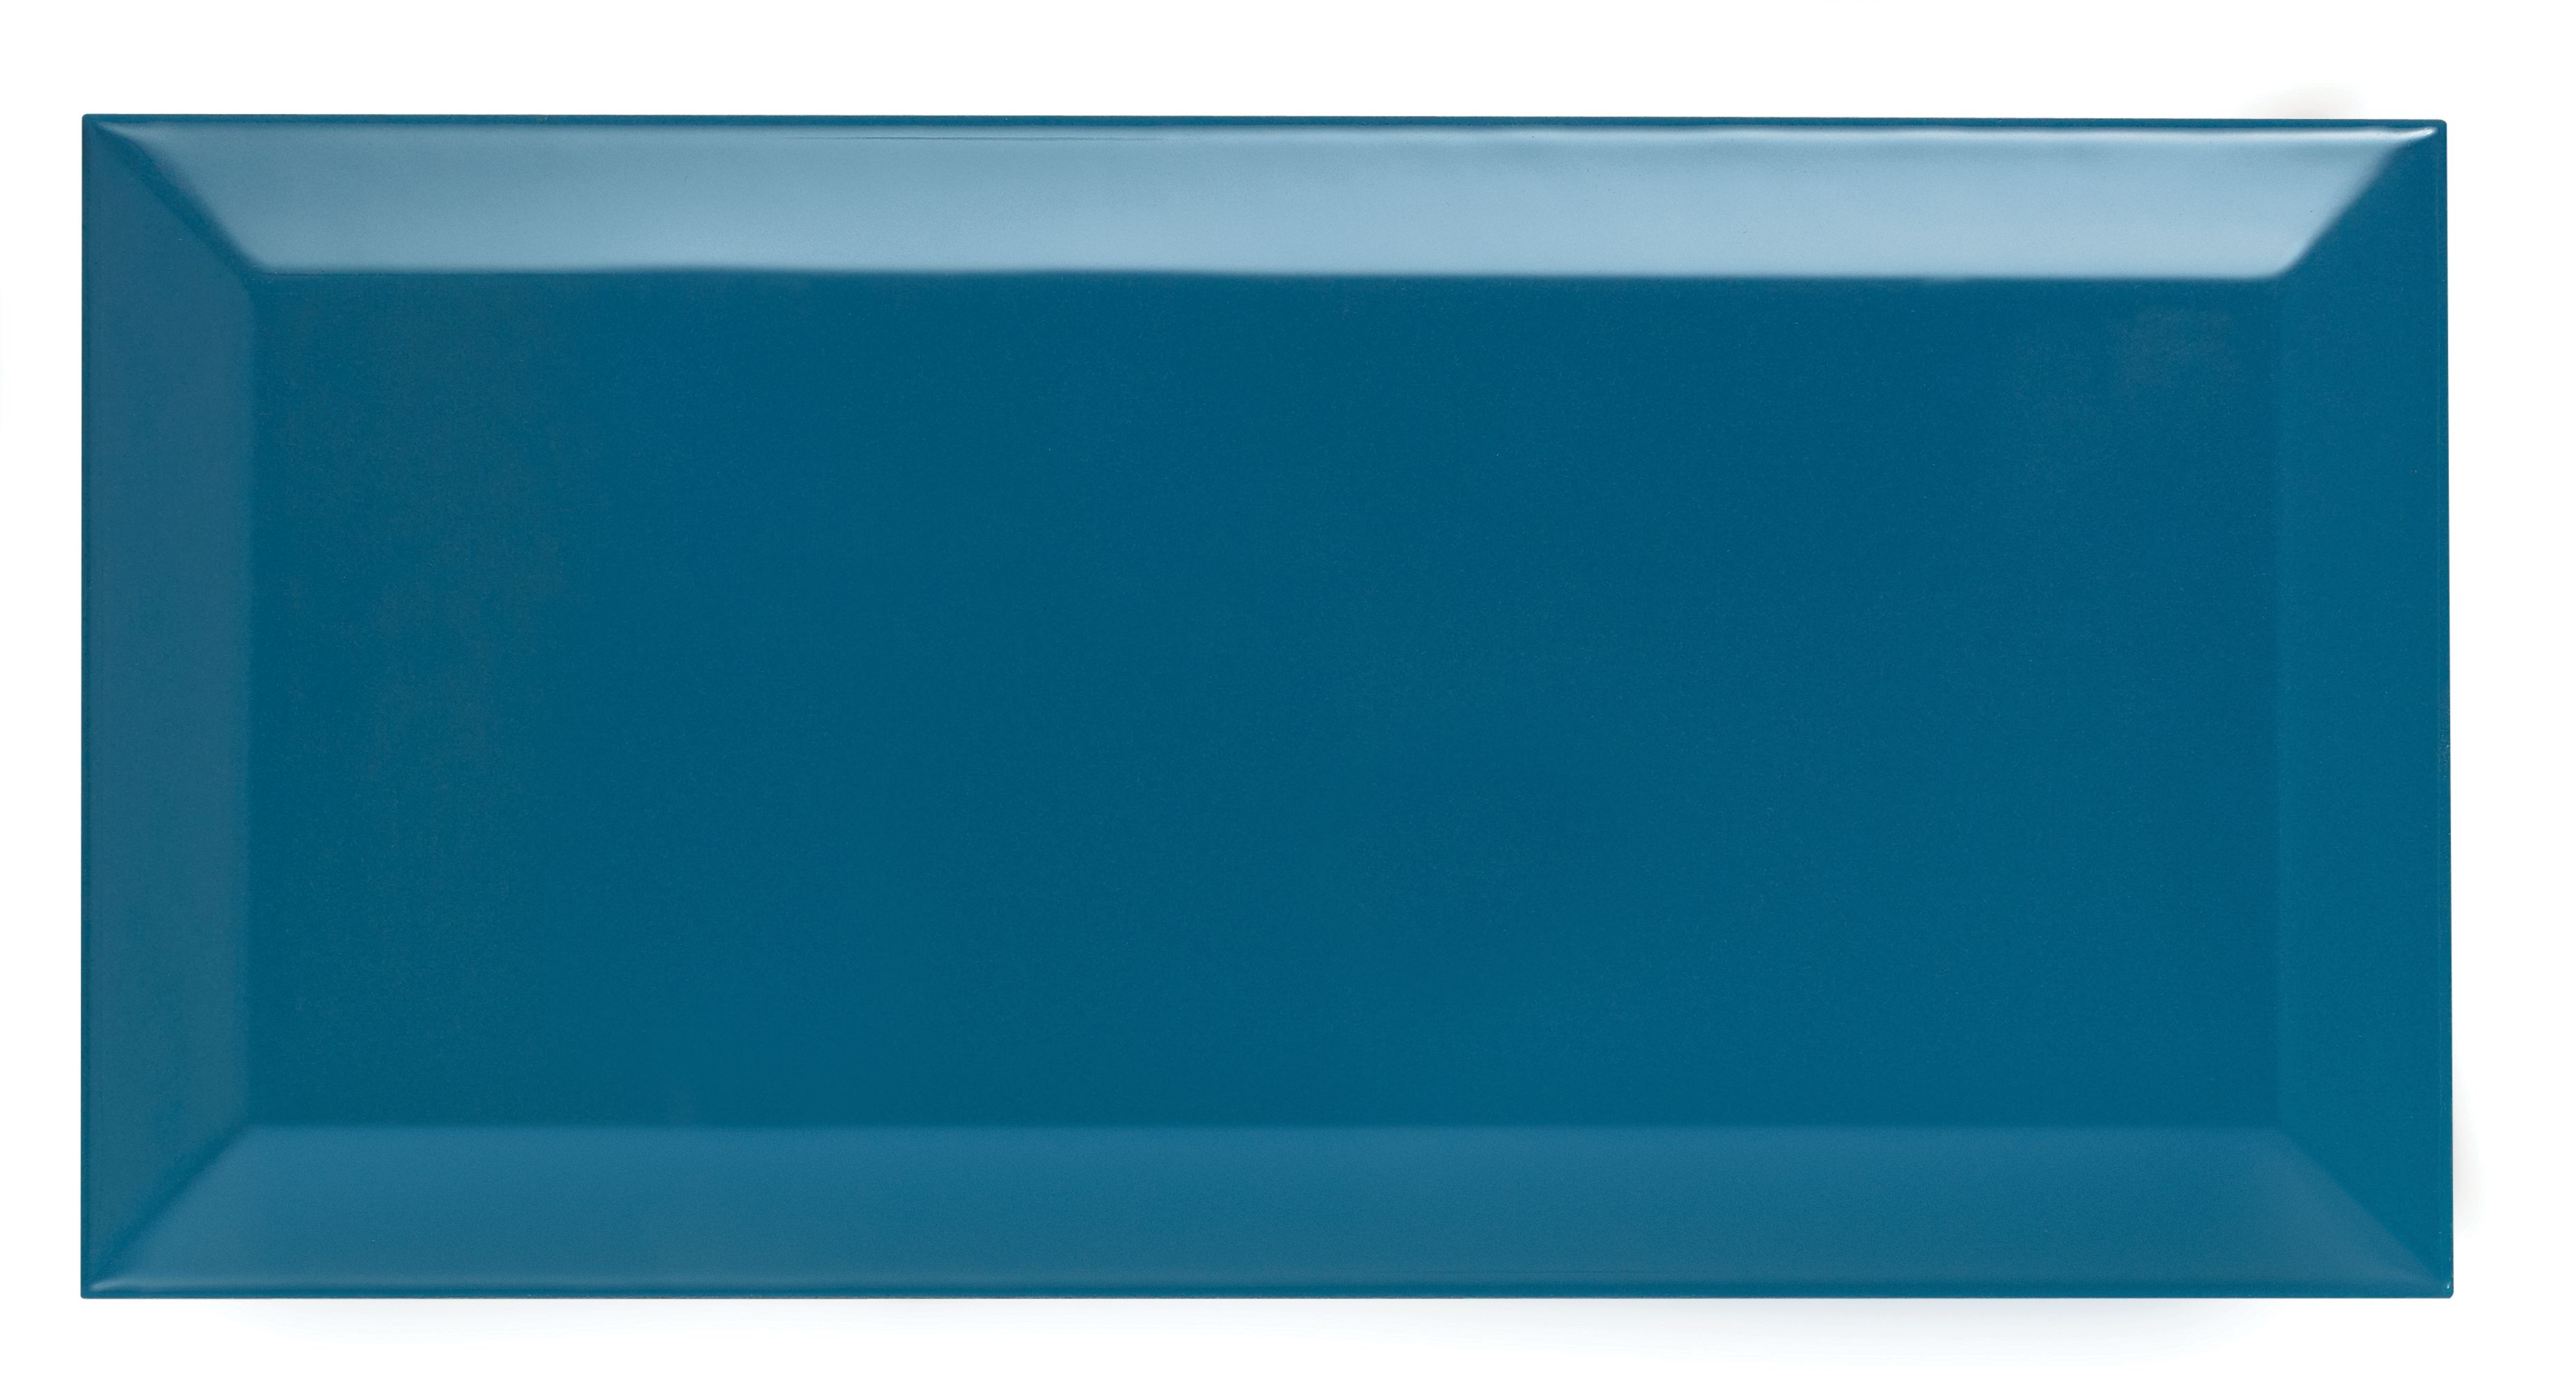 Wickes Metro Light Blue Ceramic Wall Tile - 200 x 100mm - Sample